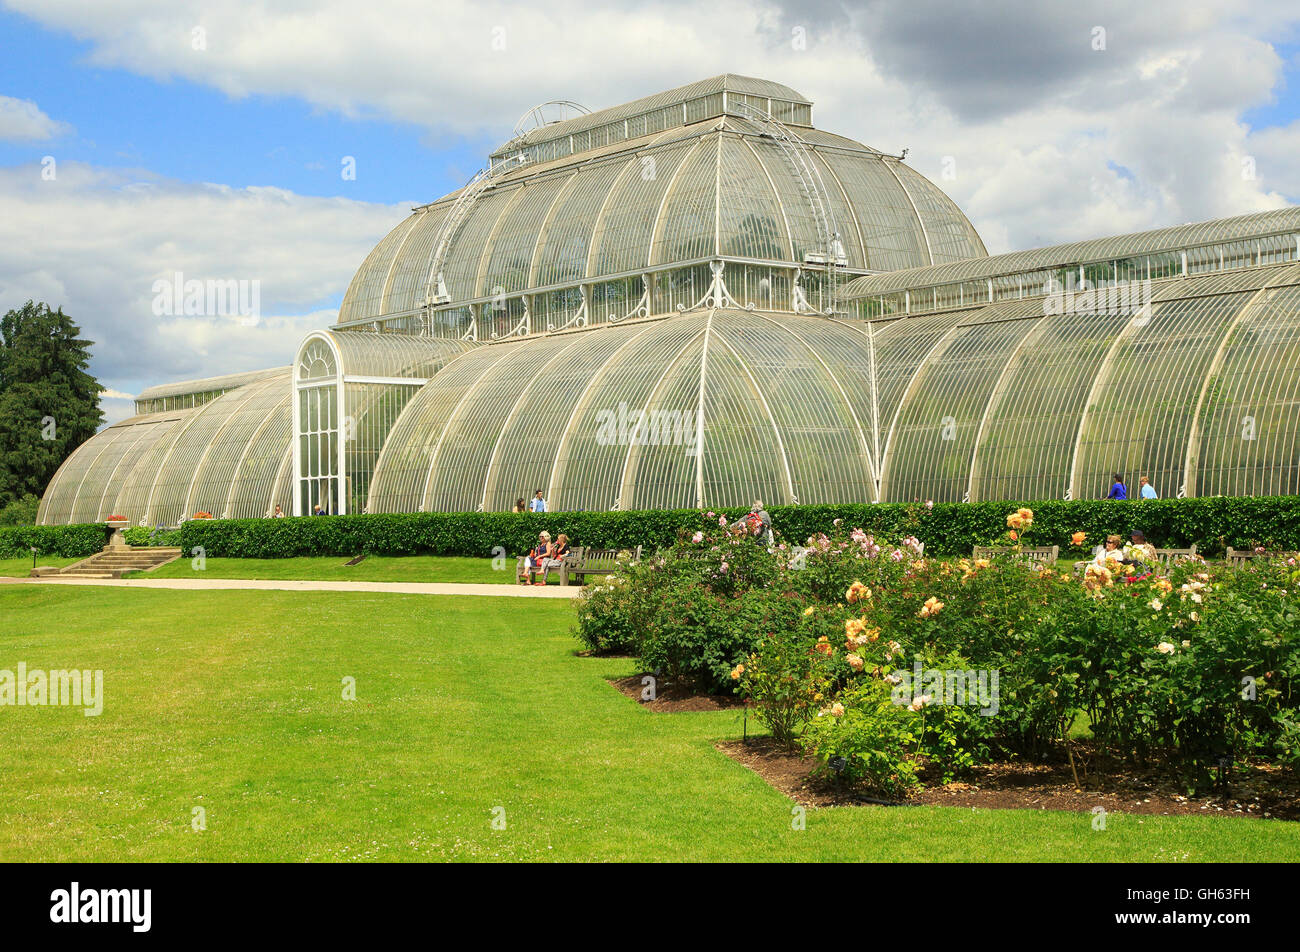 Le Palm House at Royal Botanic Gardens, Kew, Londres, Angleterre, Royaume-Uni Banque D'Images